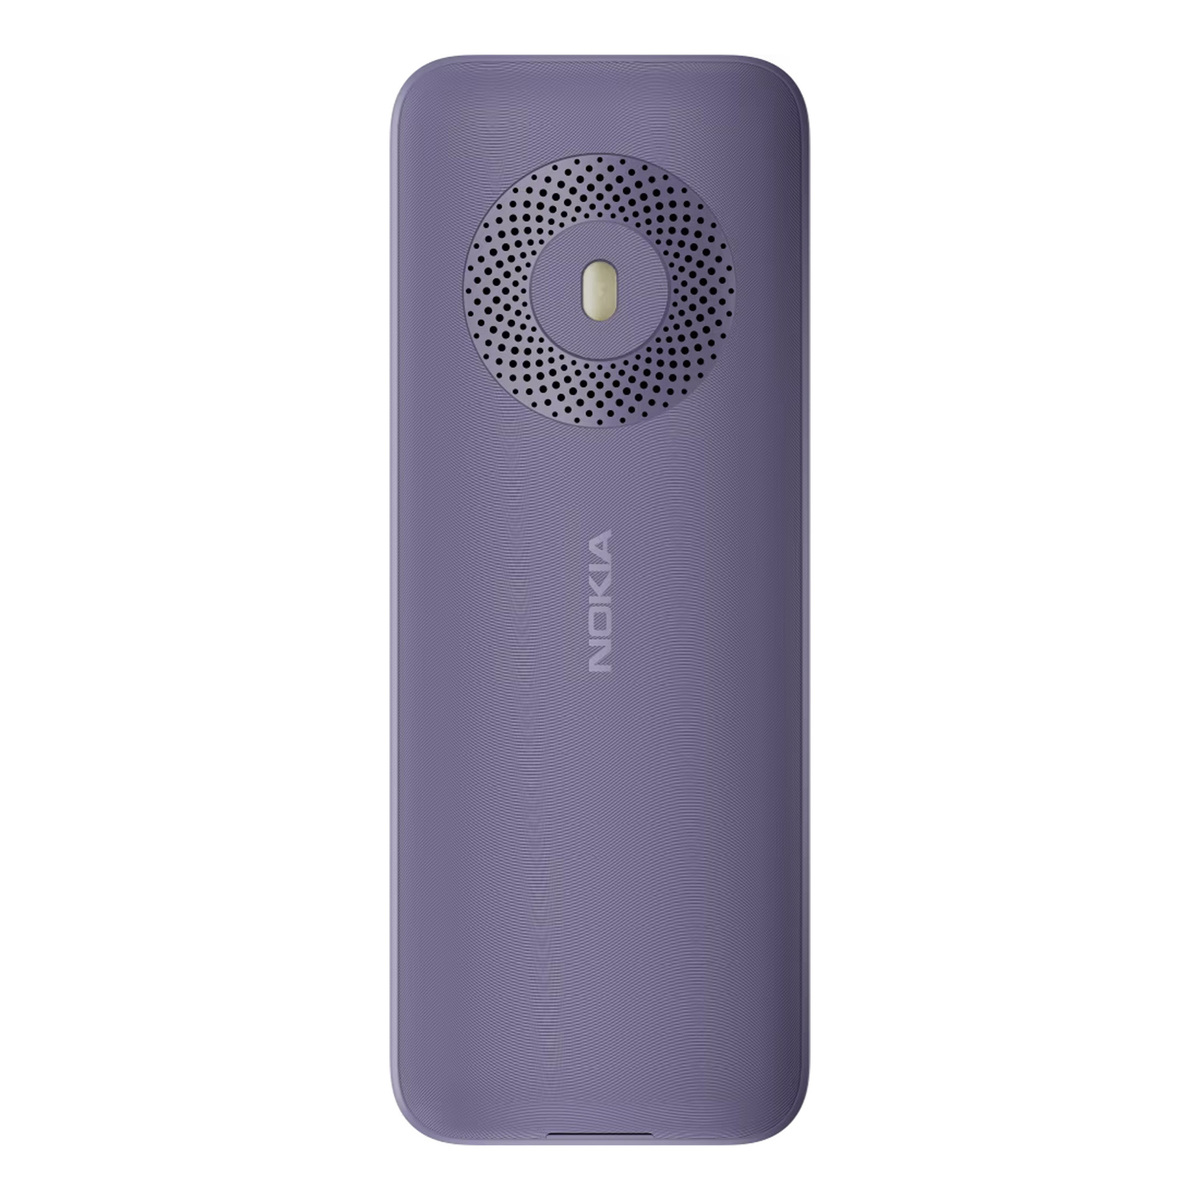 Nokia 130 M Dual SIM Feature Phone, Purple, TA-1576